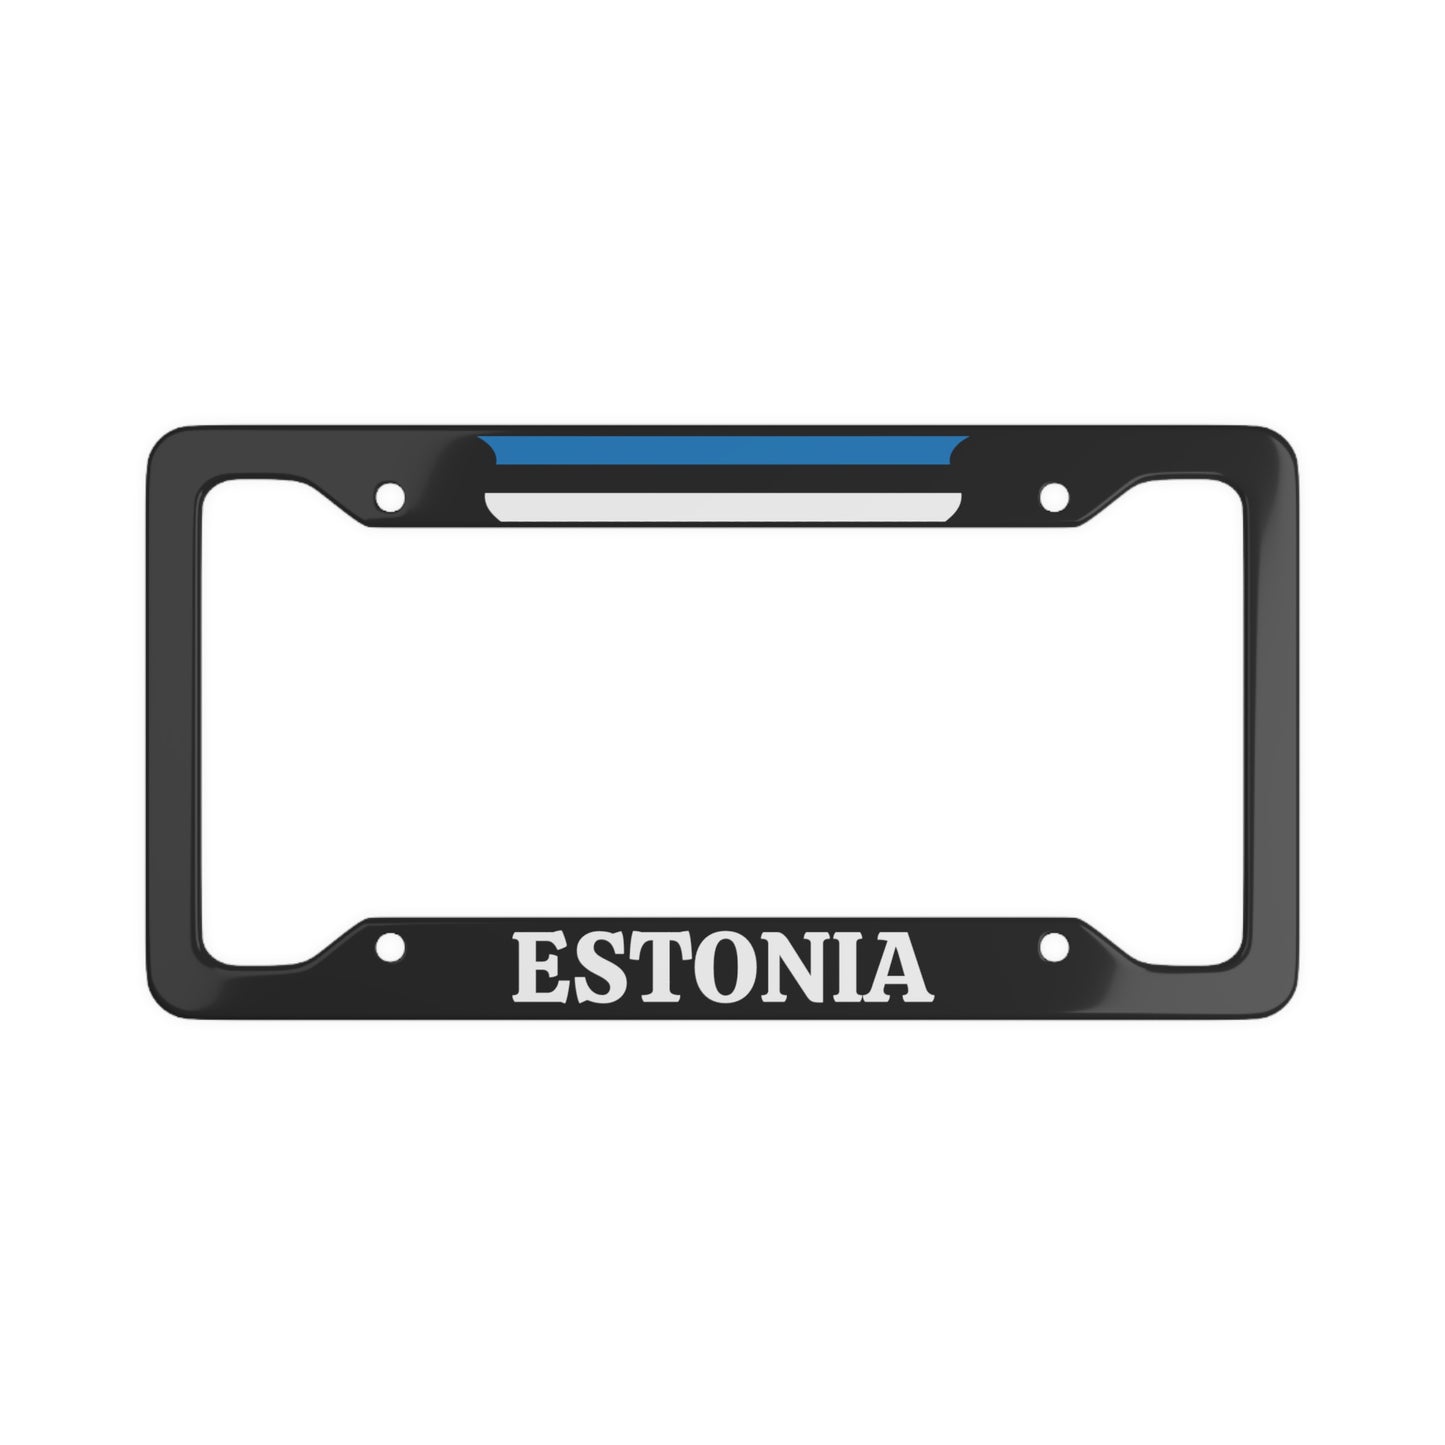 Estonia License Plate Frame